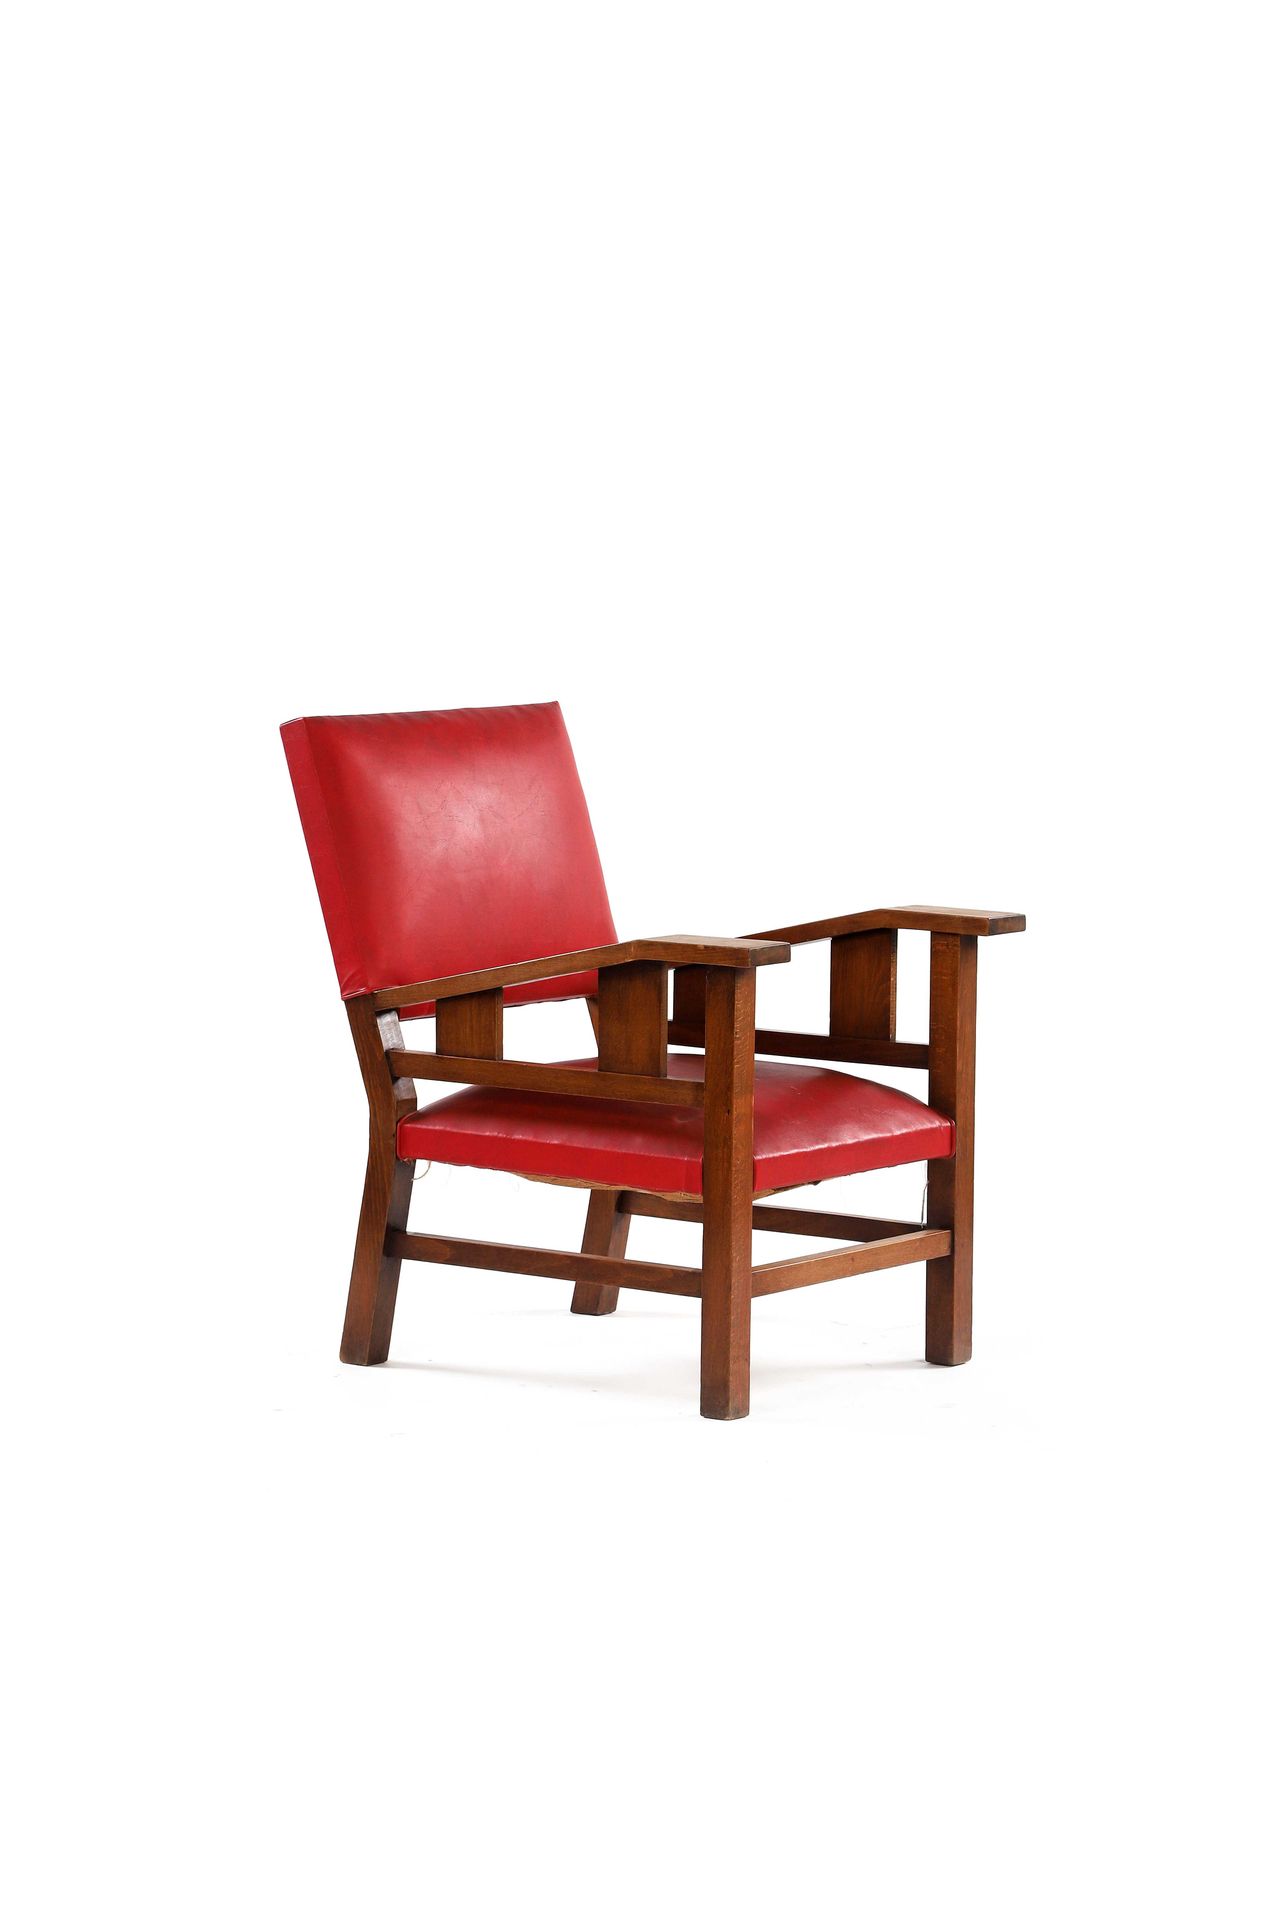 Francis JOURDAIN (1876-1958) 扶手椅
榉木，仿皮 
82 x 60 x 66厘米。
约1940年

扶手椅
榉木，仿皮
32.28 &hellip;